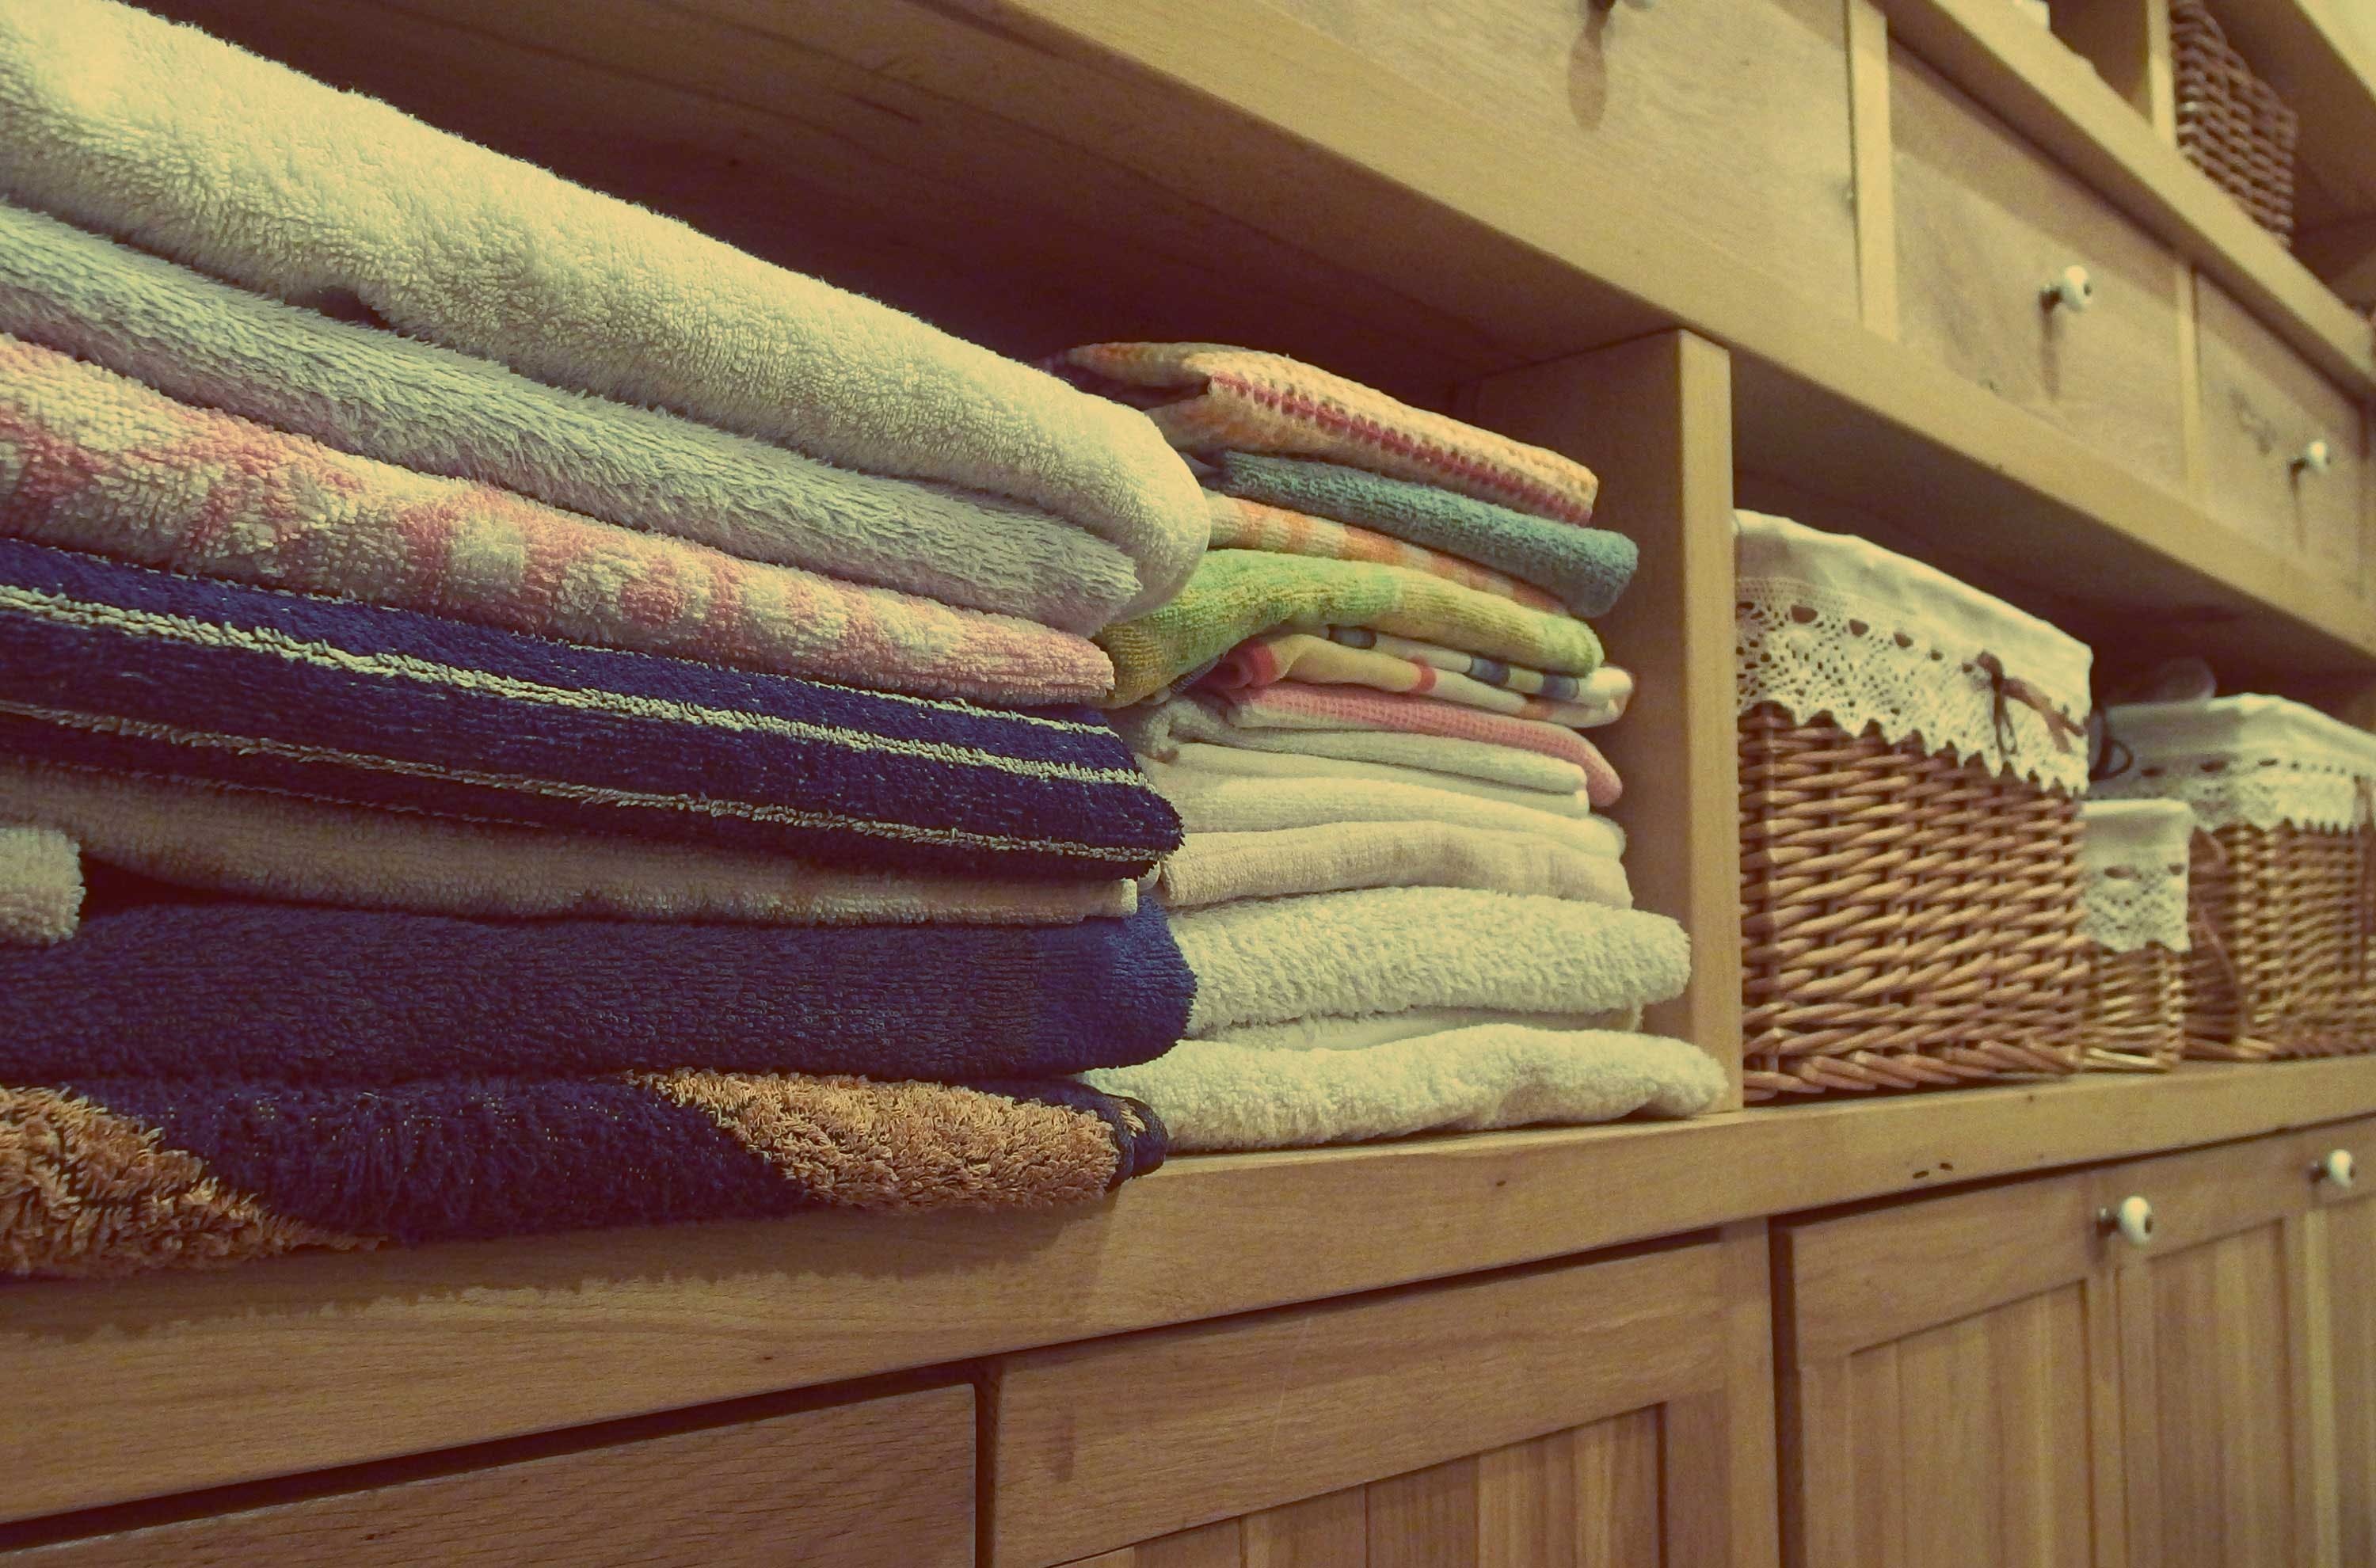 A stack of towels. | Source: Pexels